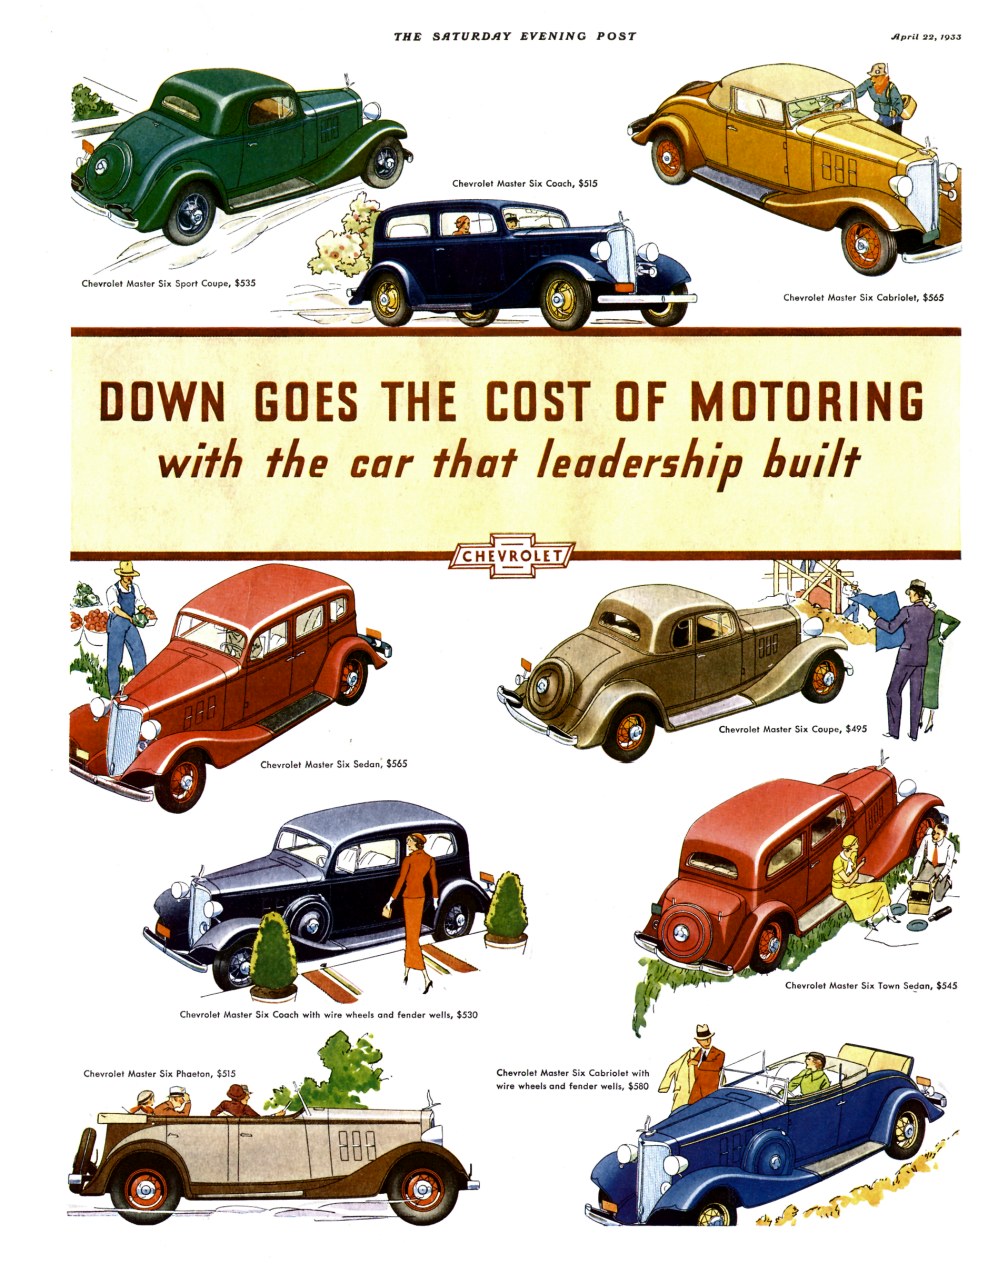 1933 American Auto Advertising